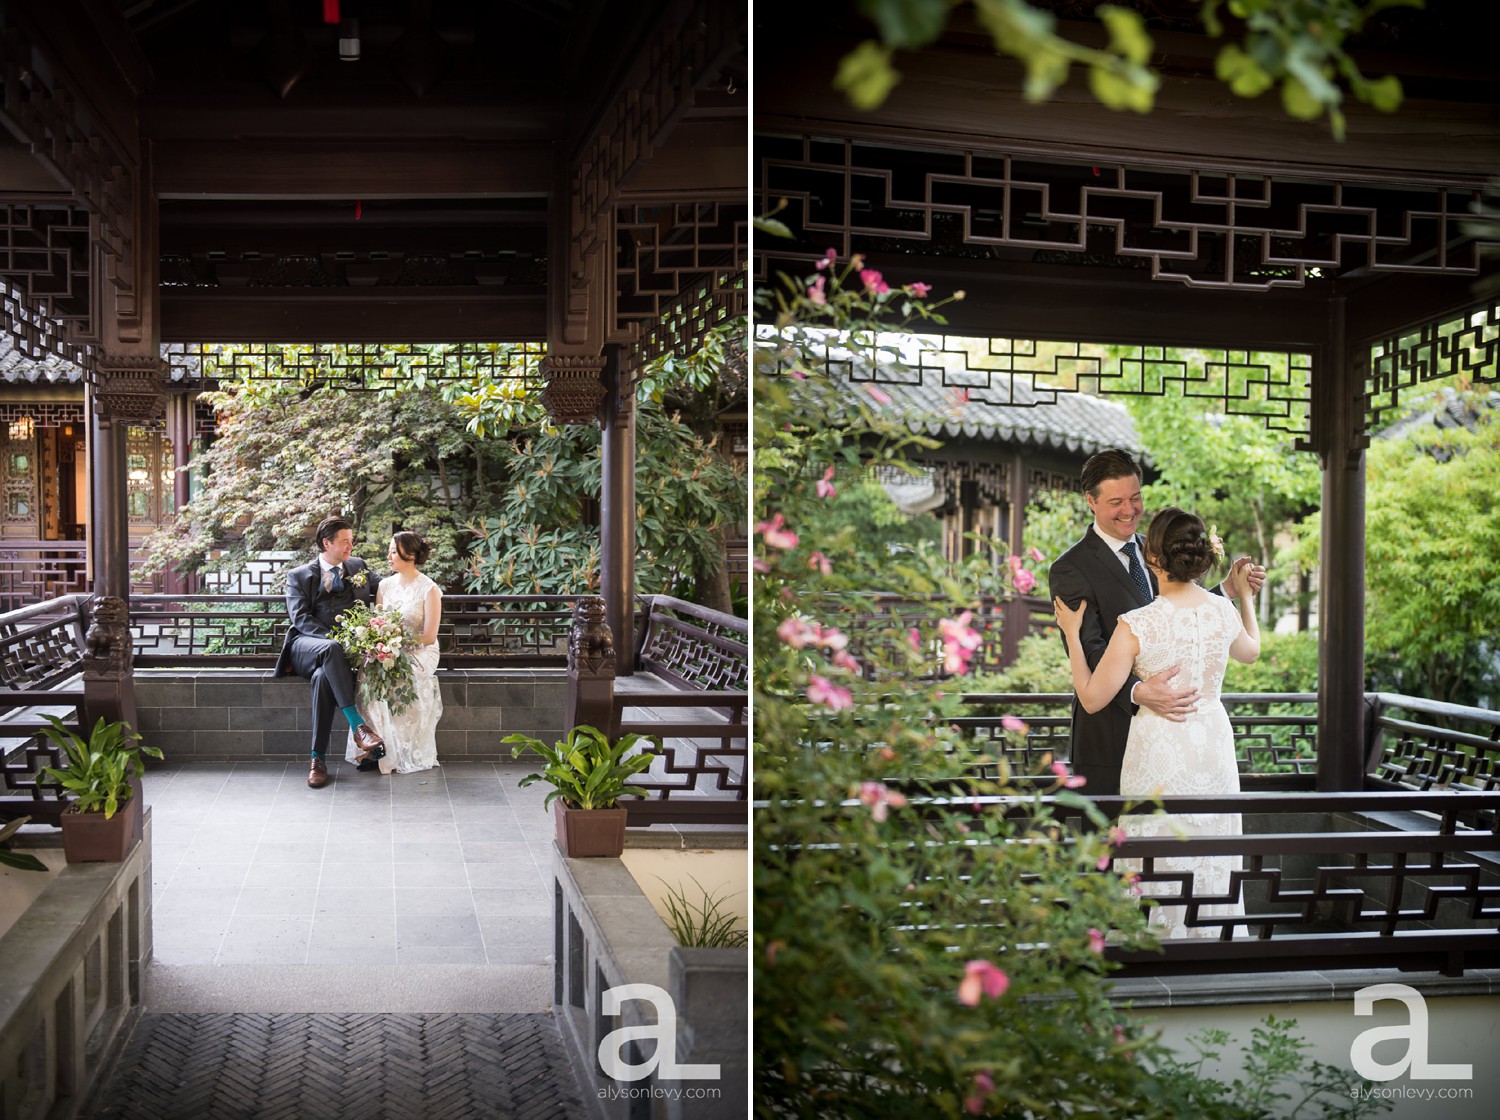 Coopers-Hall-Lan-Su-Chinese-Garden-Portland-Wedding-Photography_0029.jpg